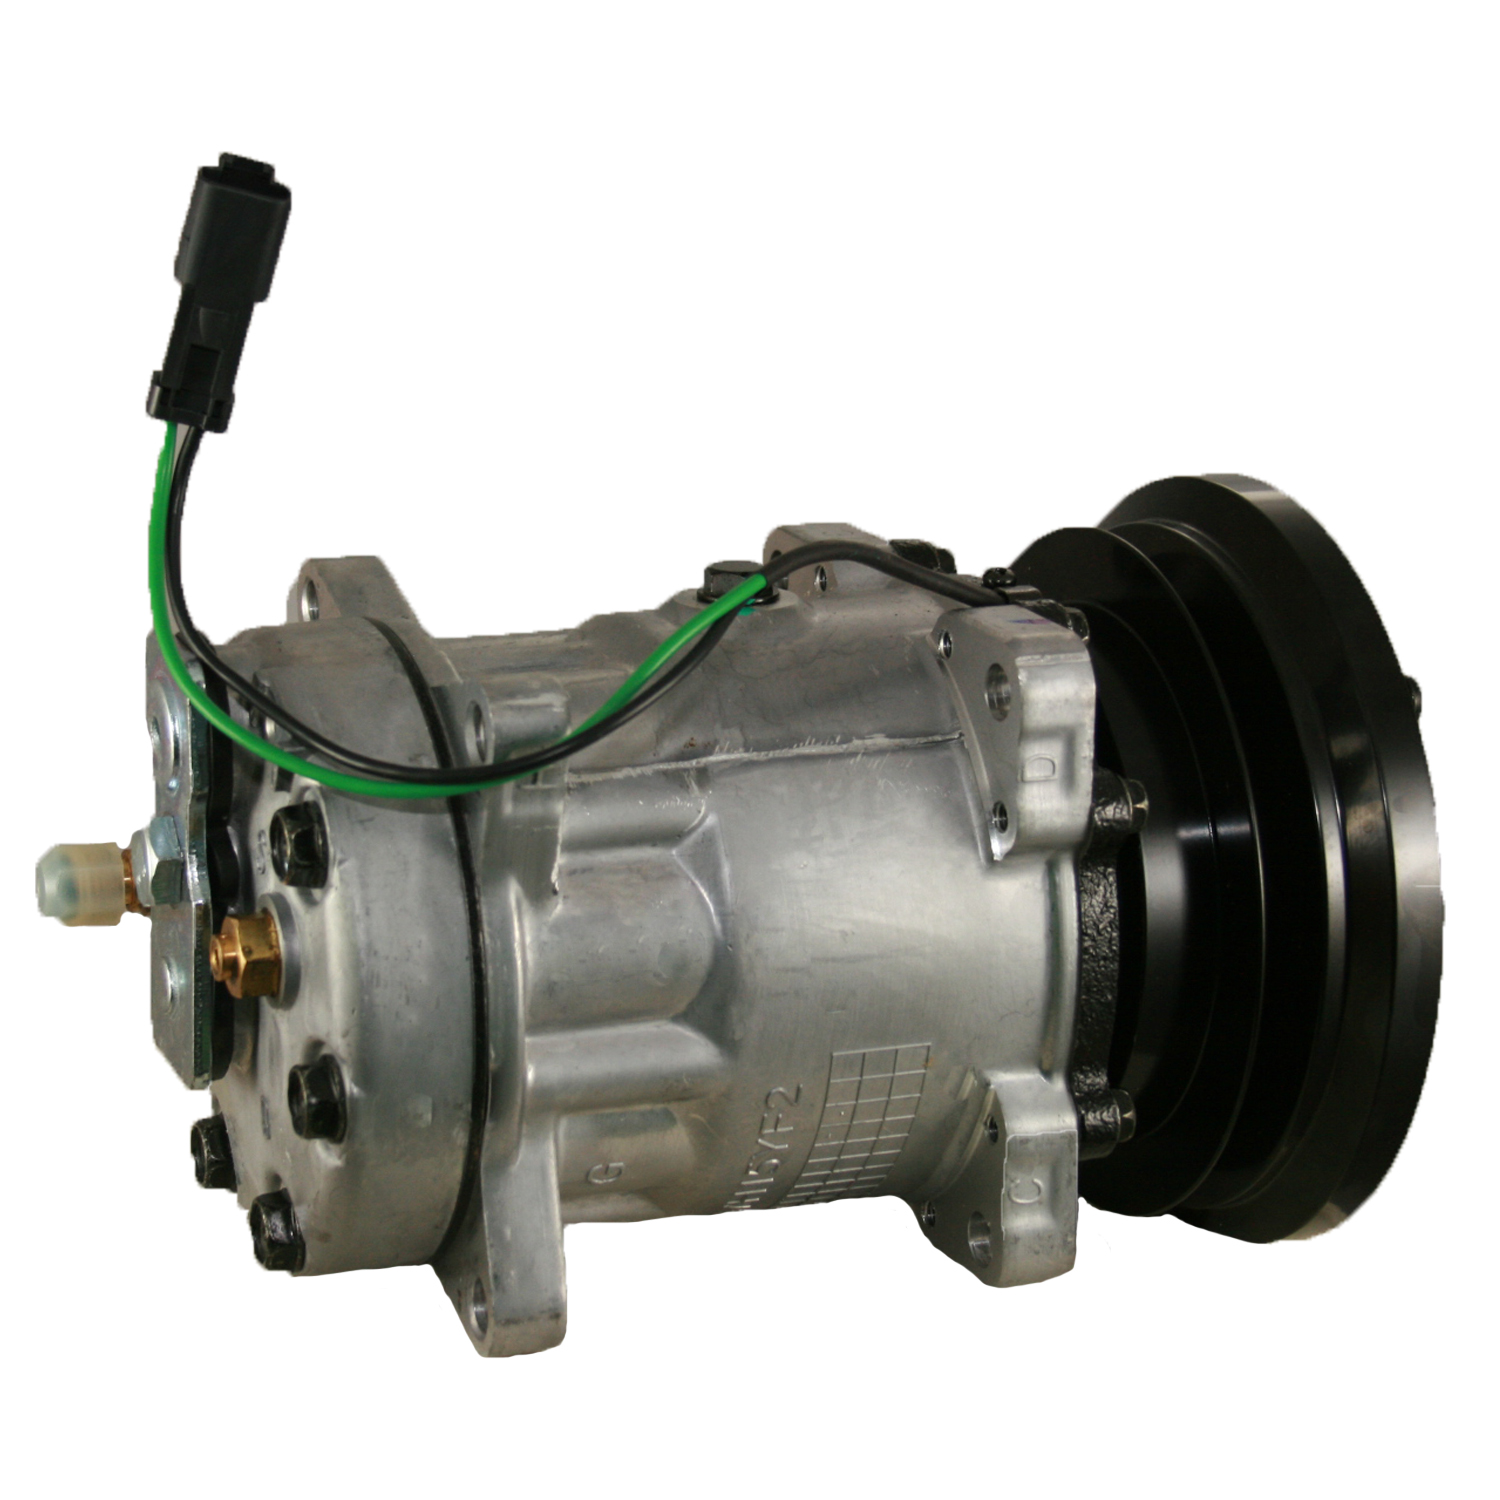 TCW Compressor 40573.102NEW New Product Image field_60b6a13a6e67c